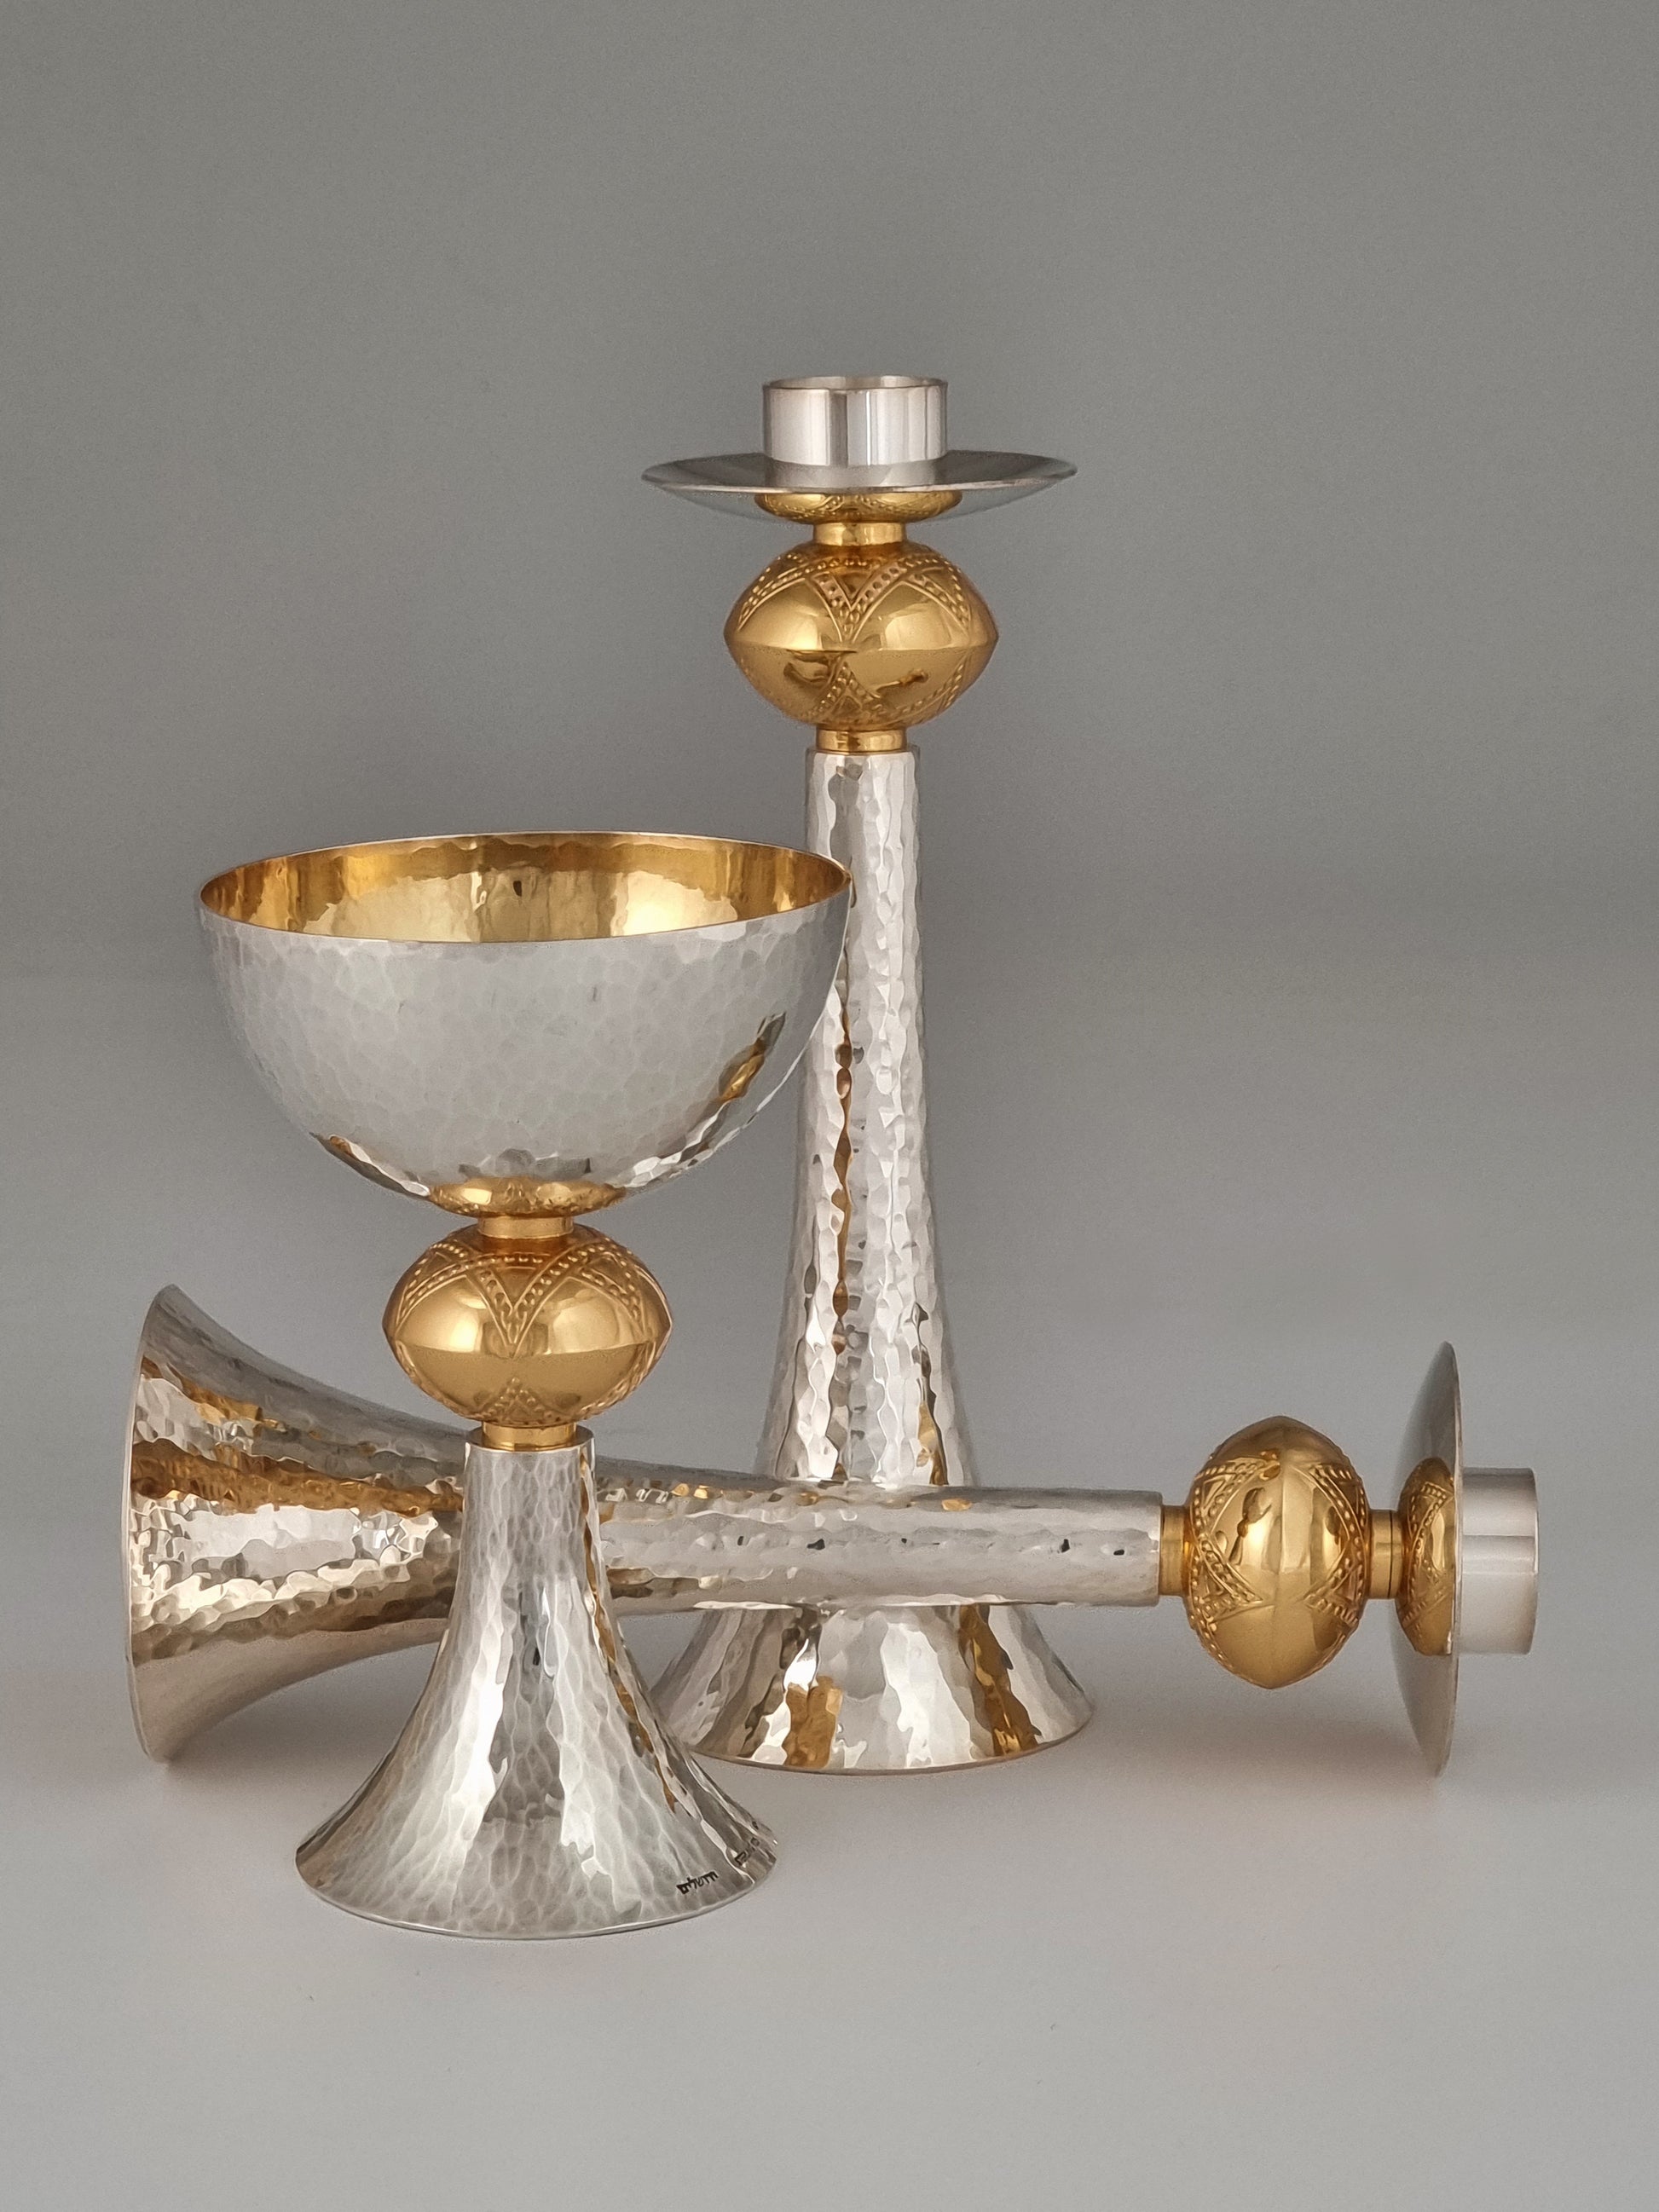 Yemini Kiddush set comprised of a David Kiddush cup and David candlesticks